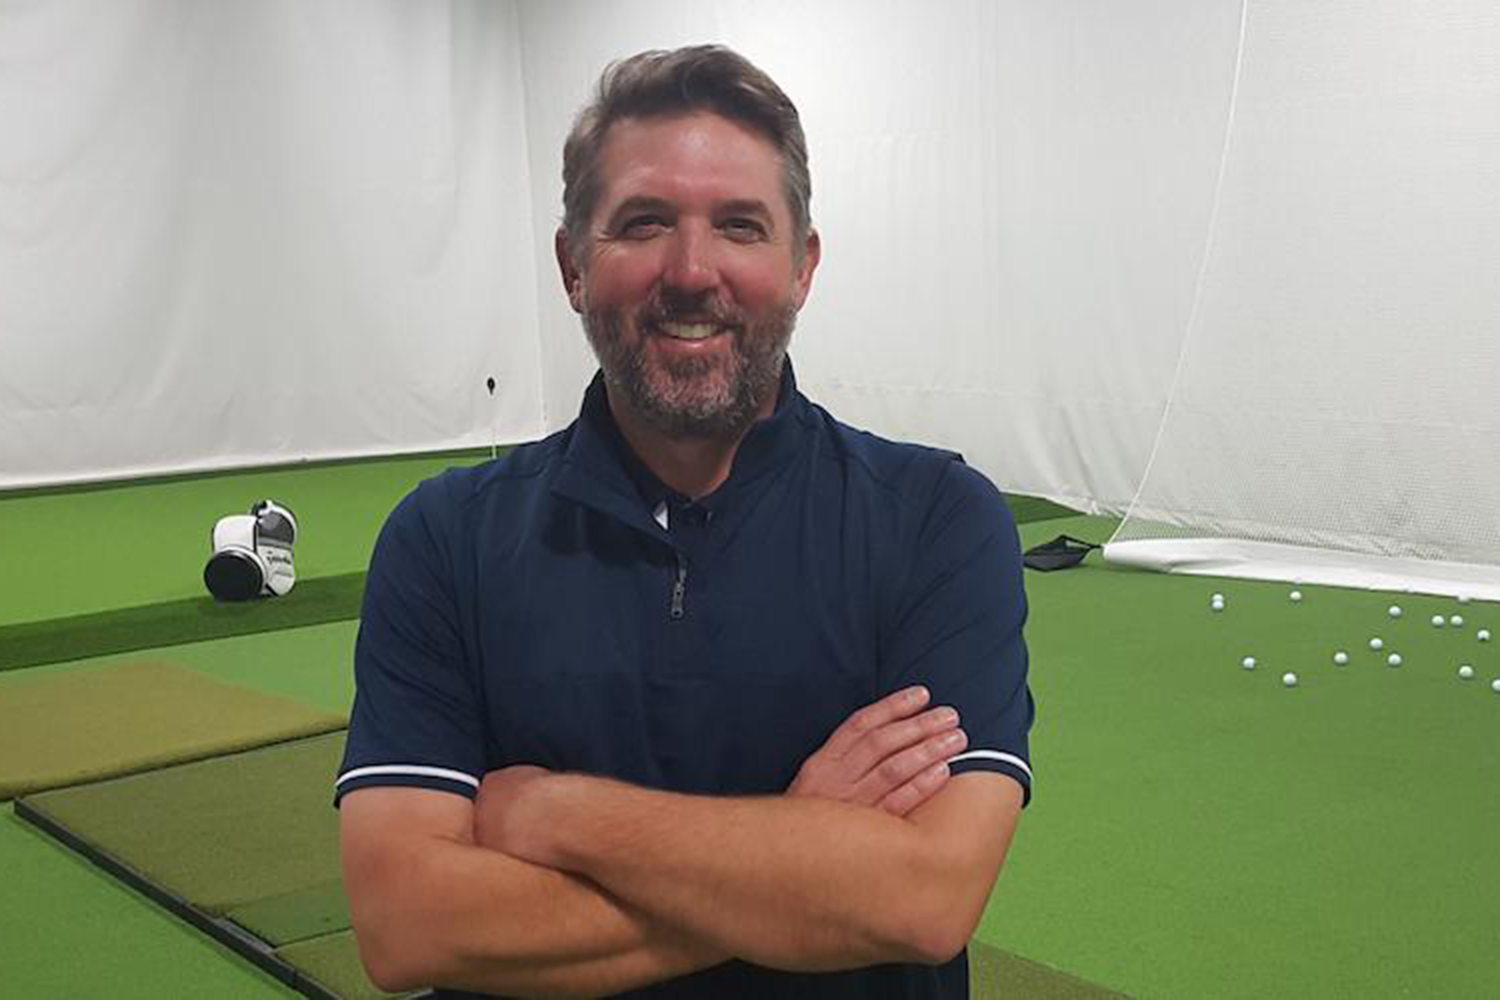 Golf Instruction Podcast